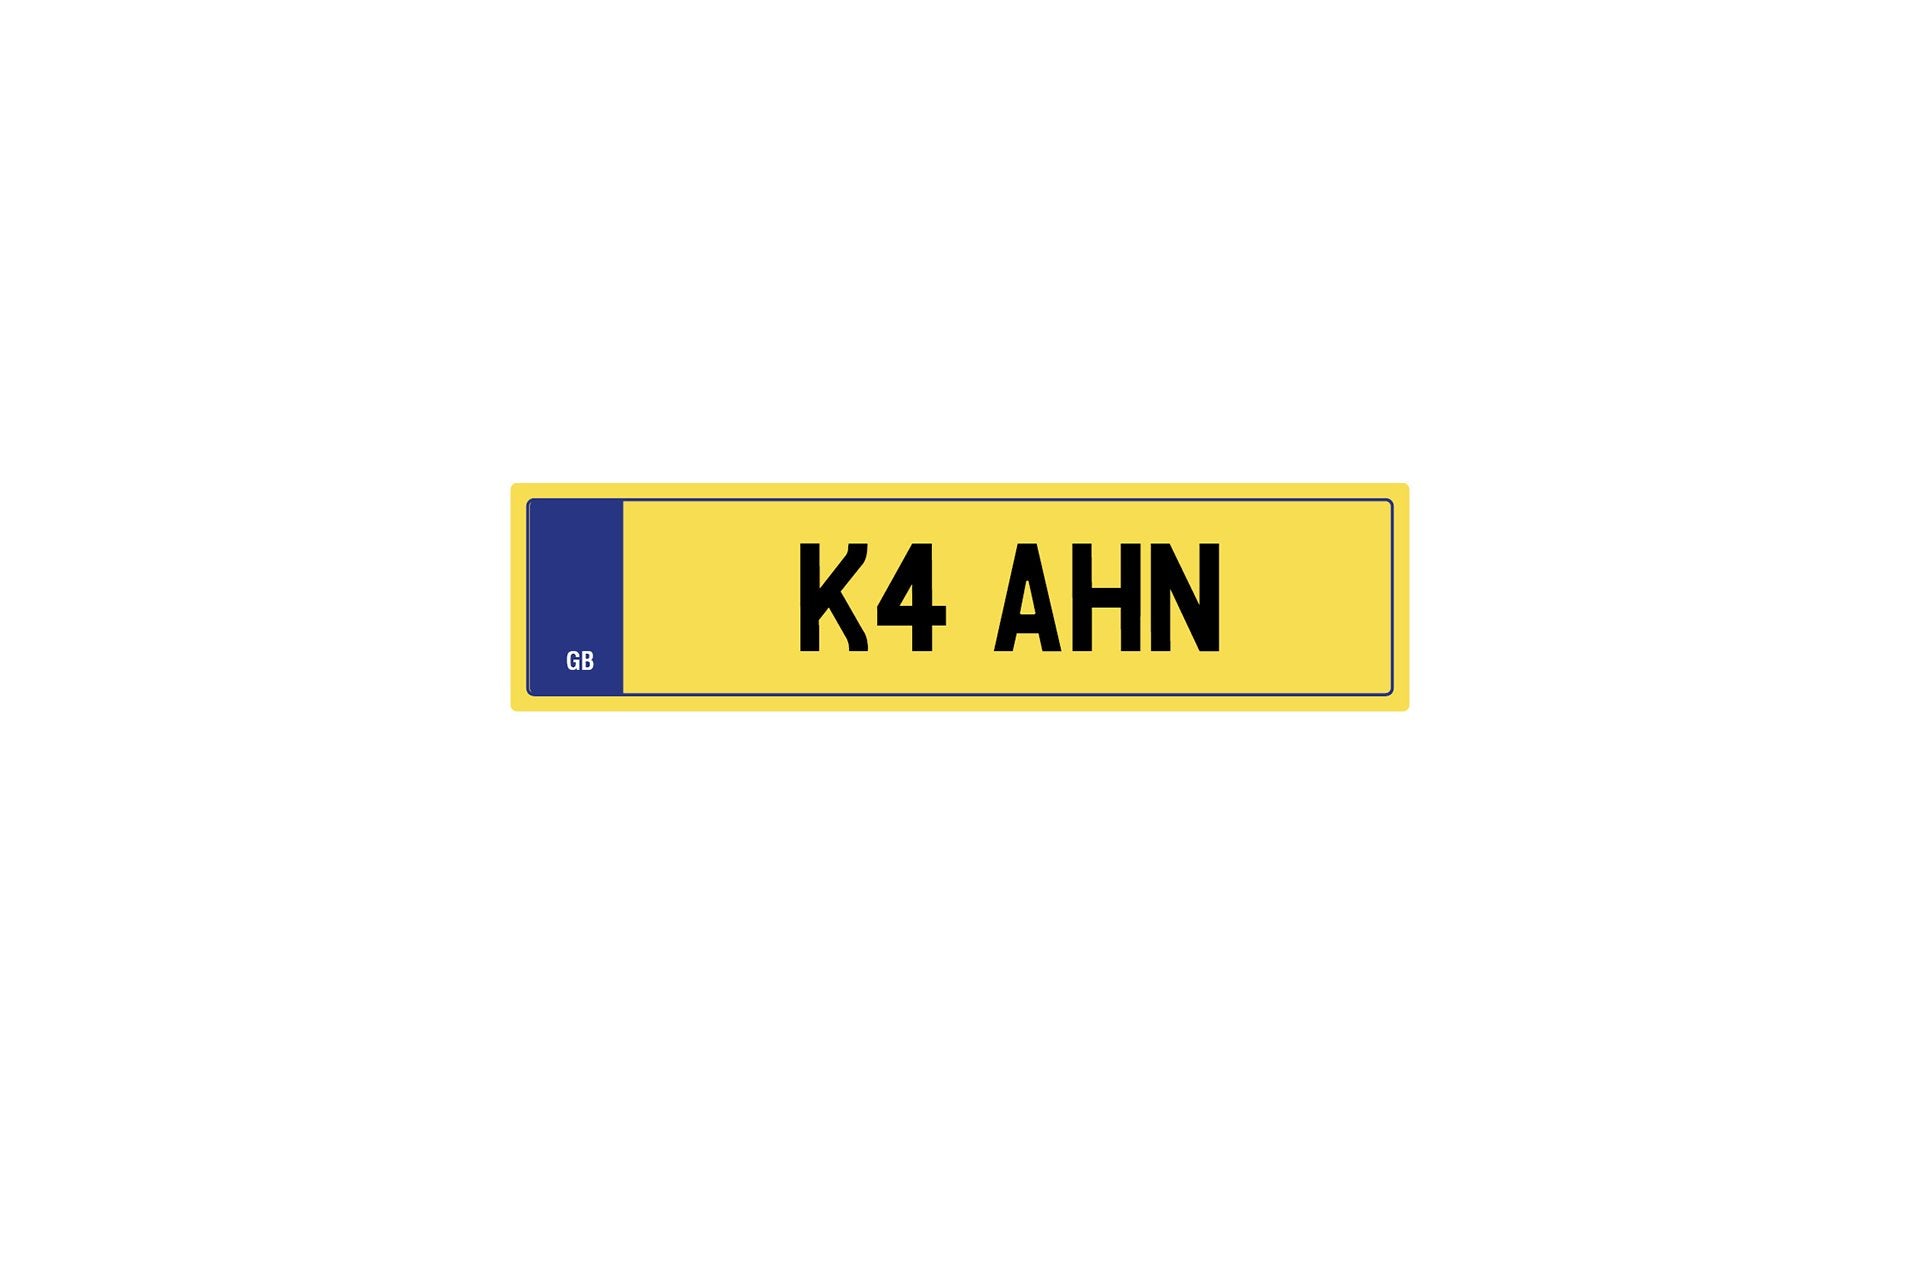 Private Plate K4 Ahn by Kahn - Image 215